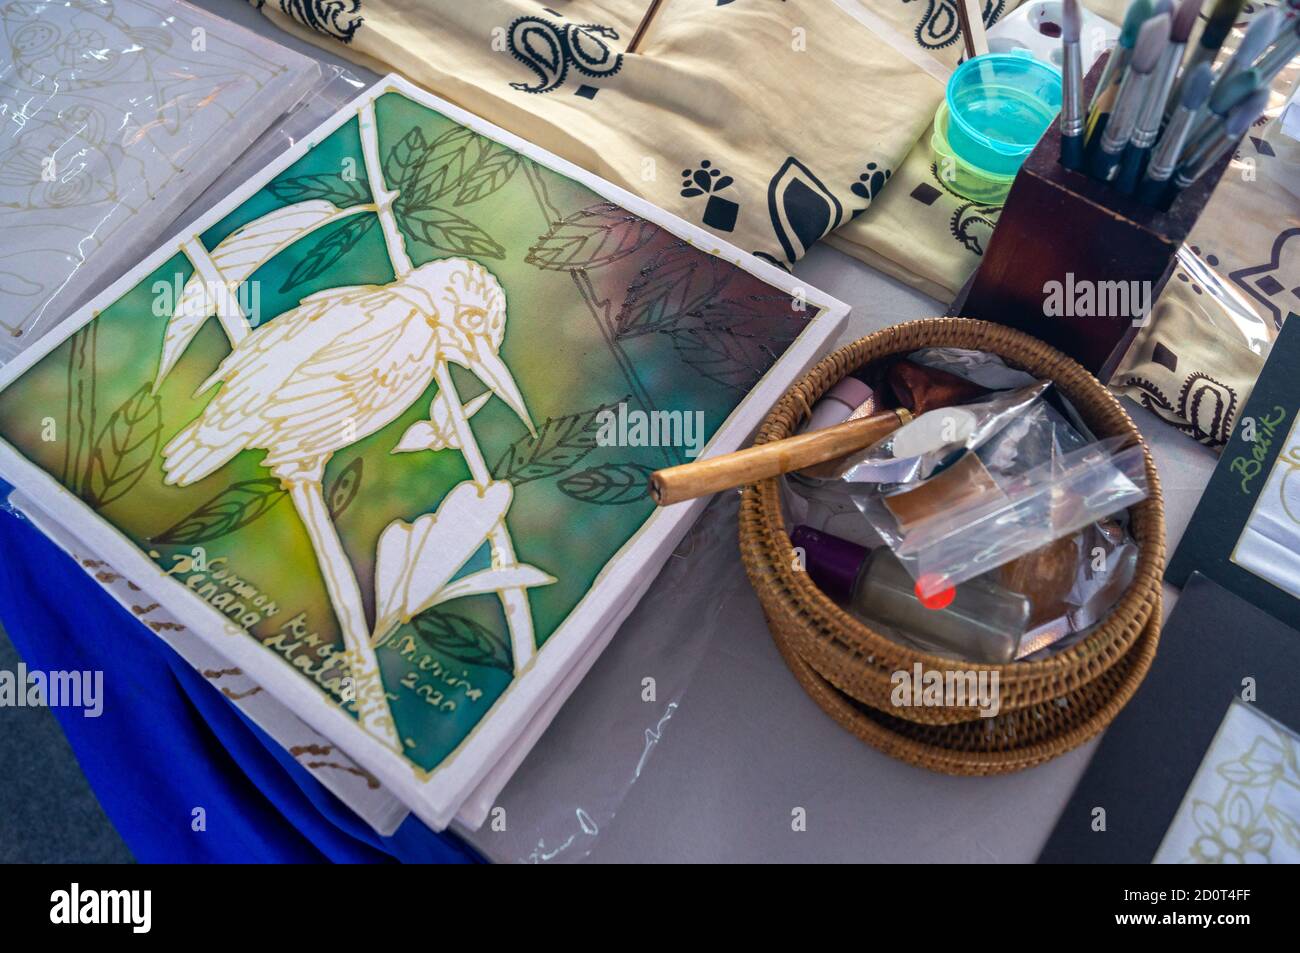 Georgetown, Penang/Malaysia - Feb 15 2020: Batik drawing art. Stock Photo